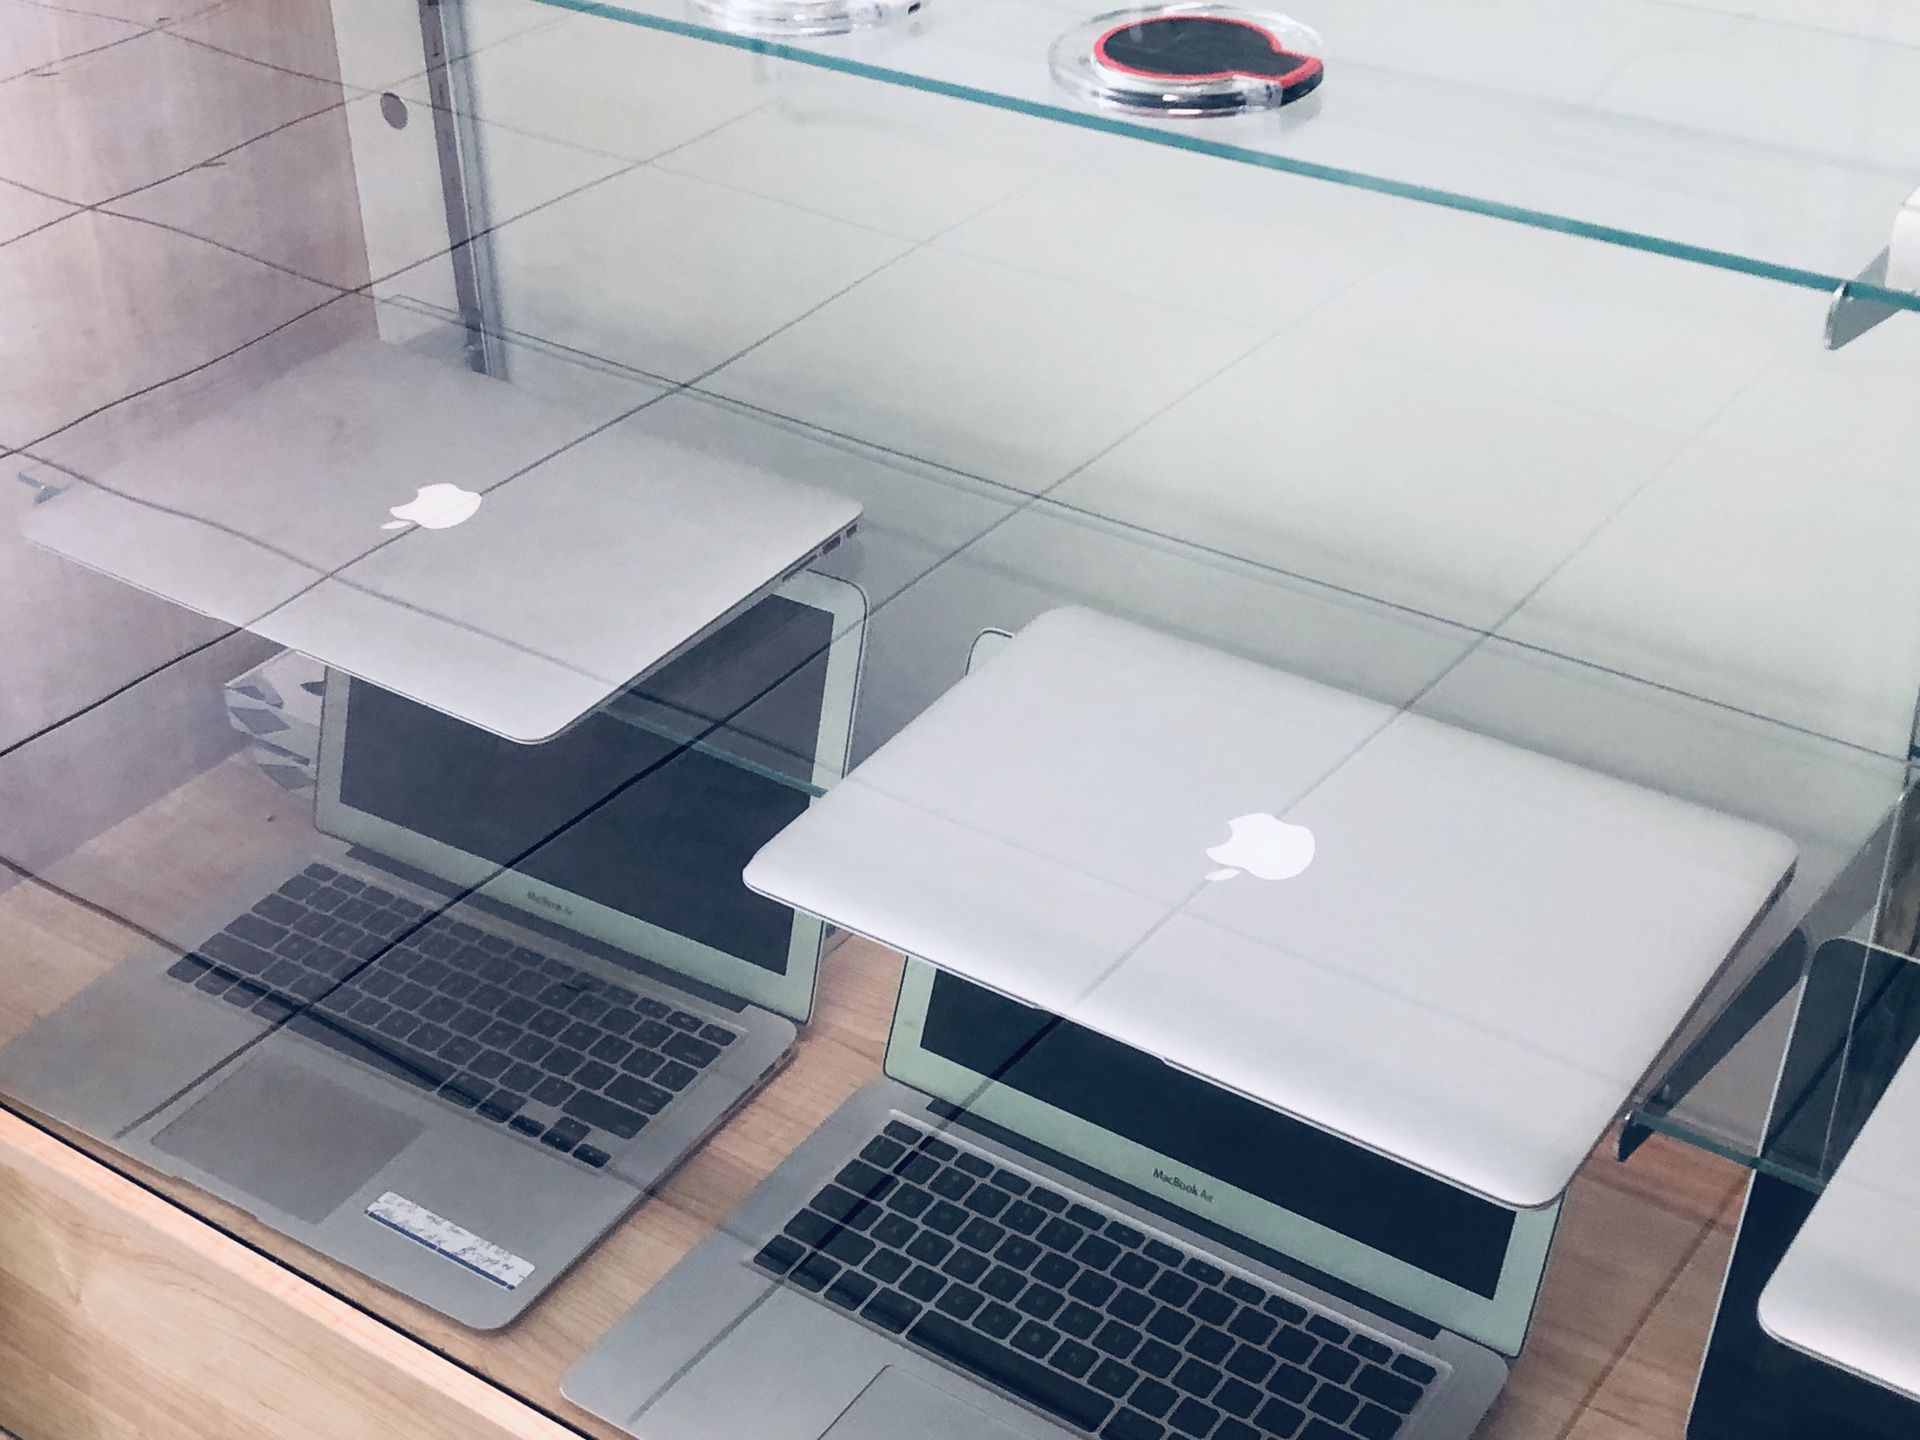 MacBook Air blowout sale 💻$389 😳